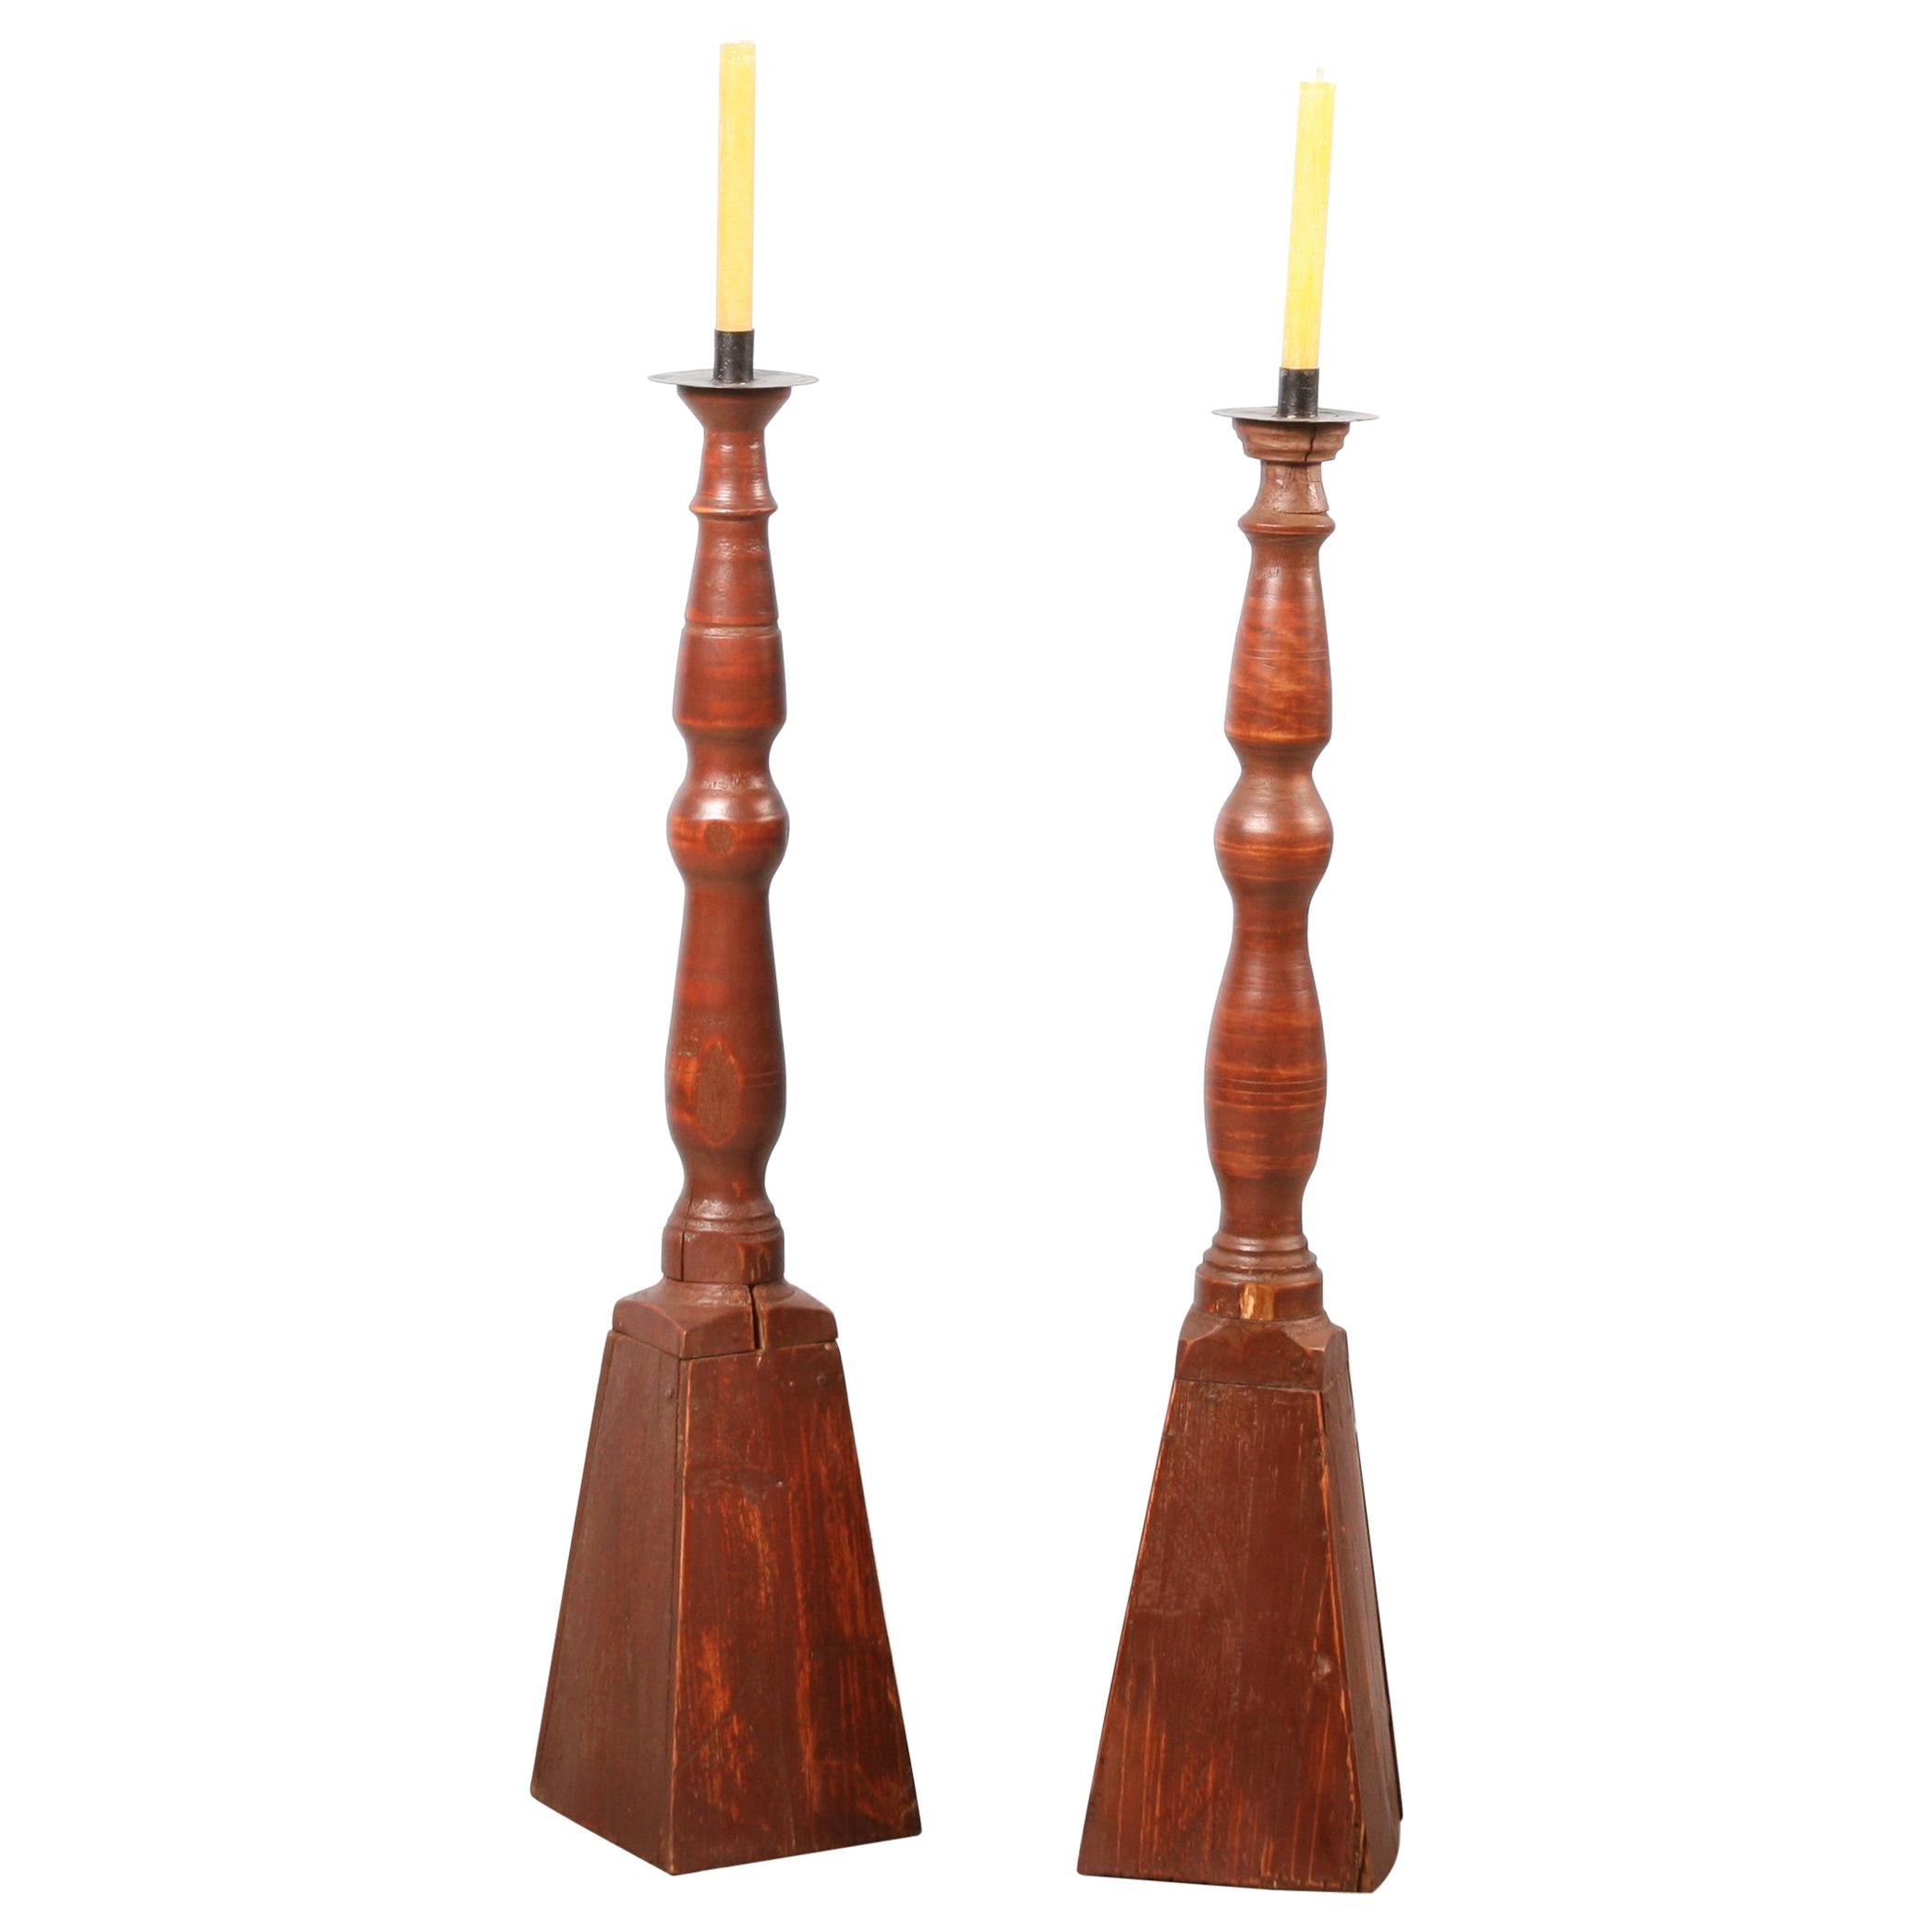 Pair of Large Antique Wooden Candlesticks - Sweden ca. 1840